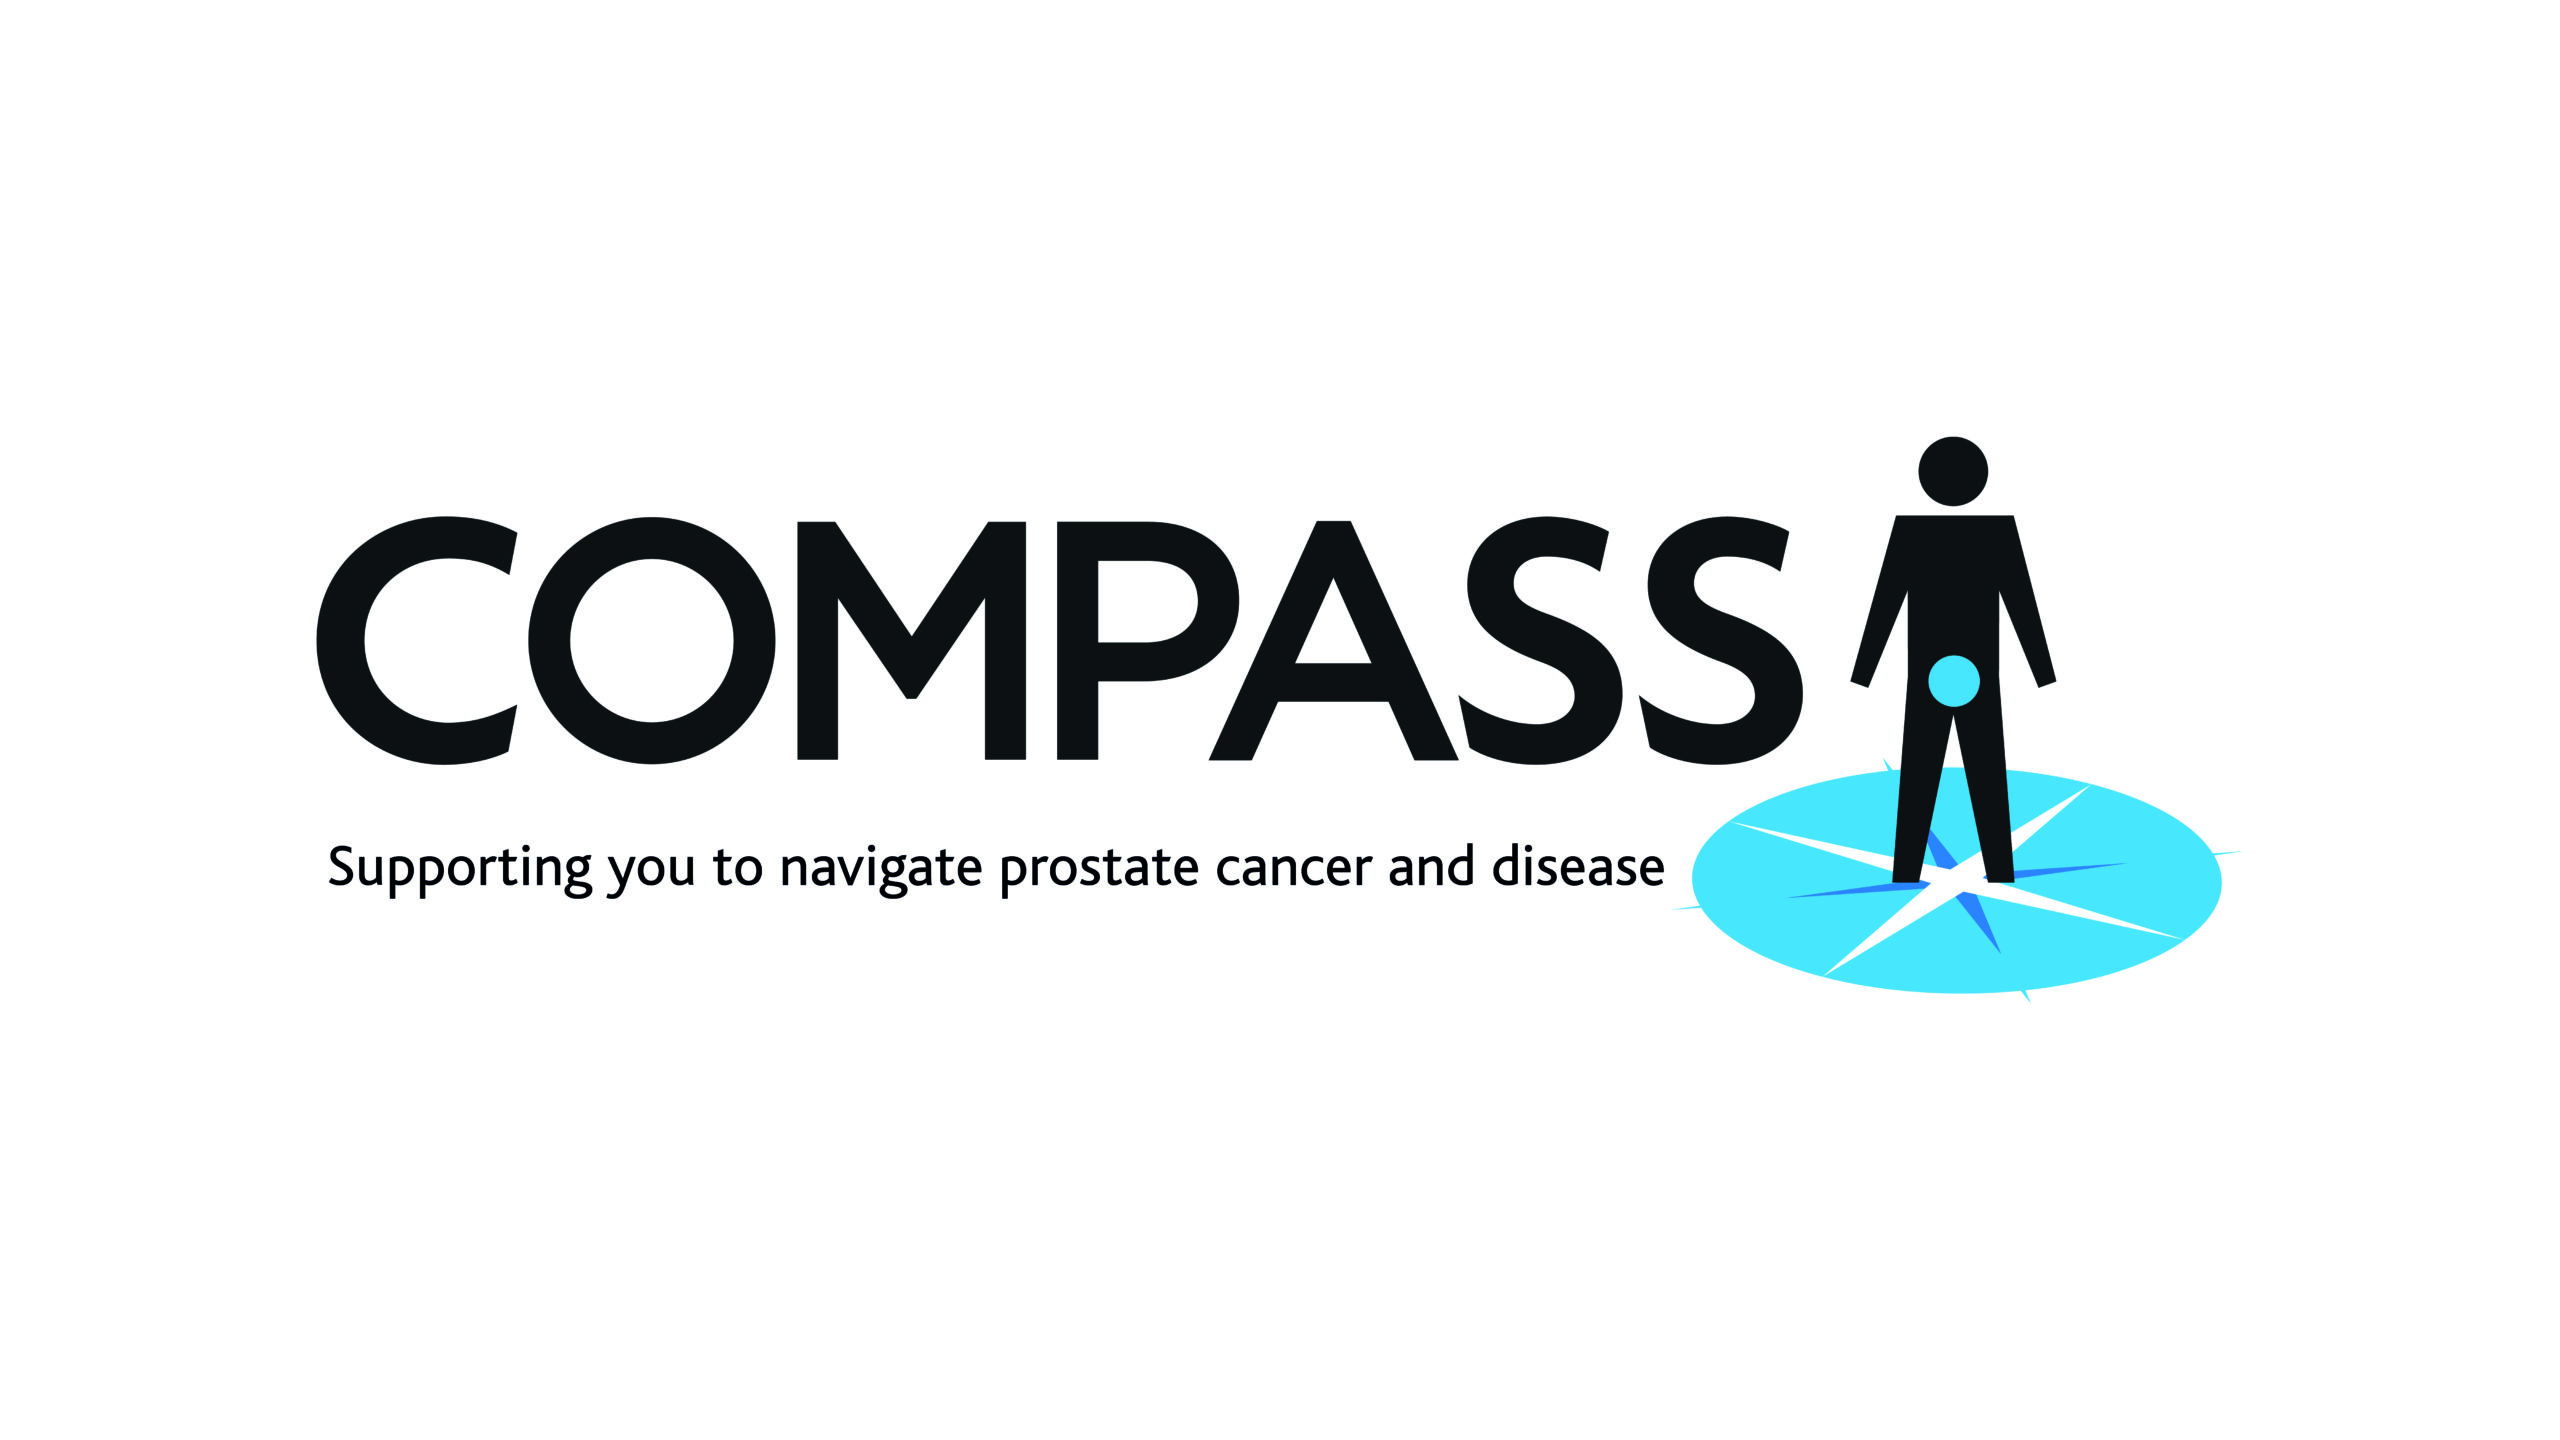 COMPASS logo with strapline